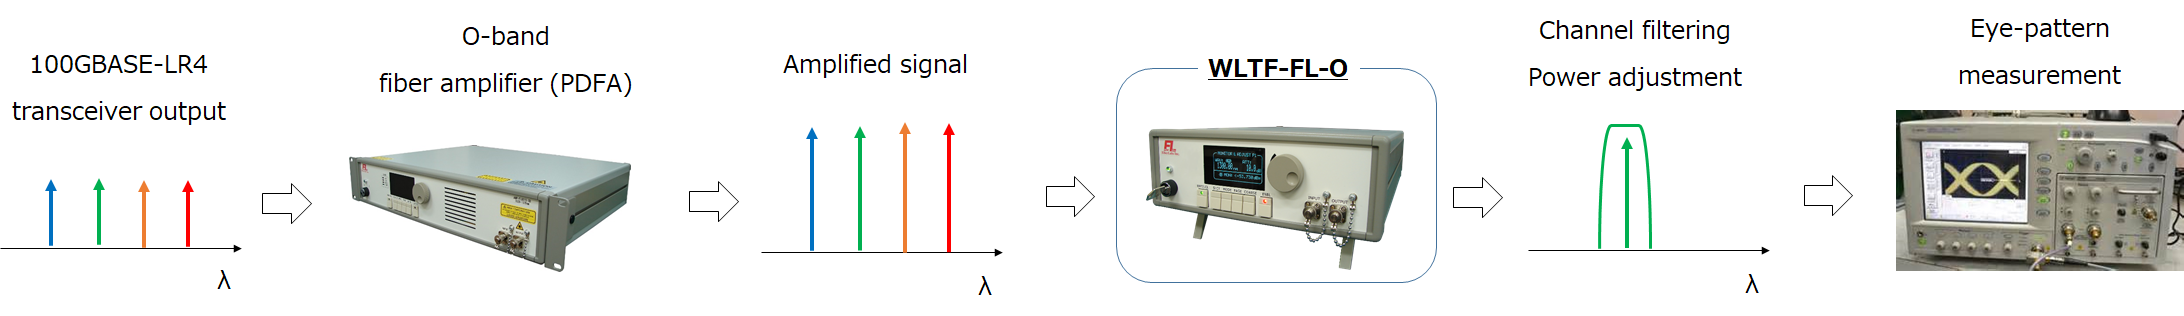 schematic of o-band transceiver testing setup